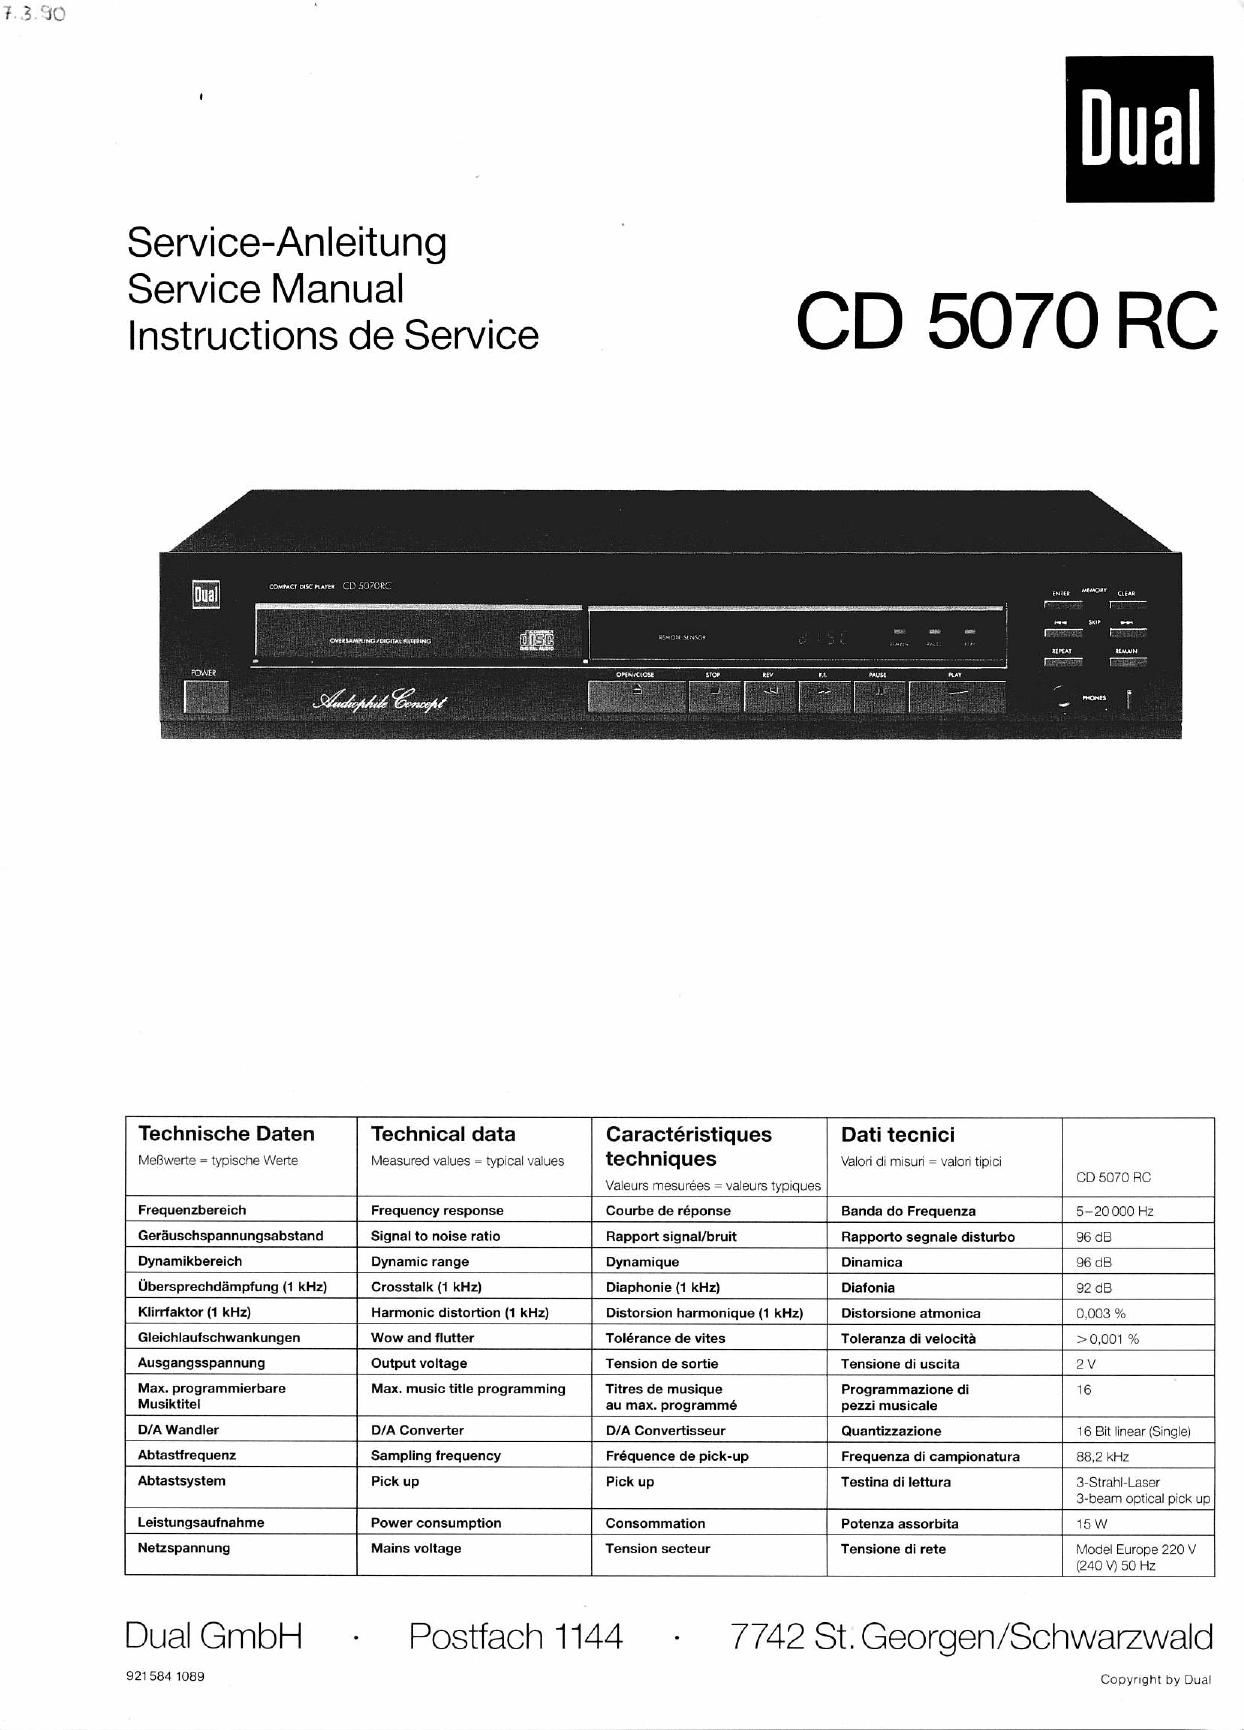 Dual CD 5070 RC Service Manual